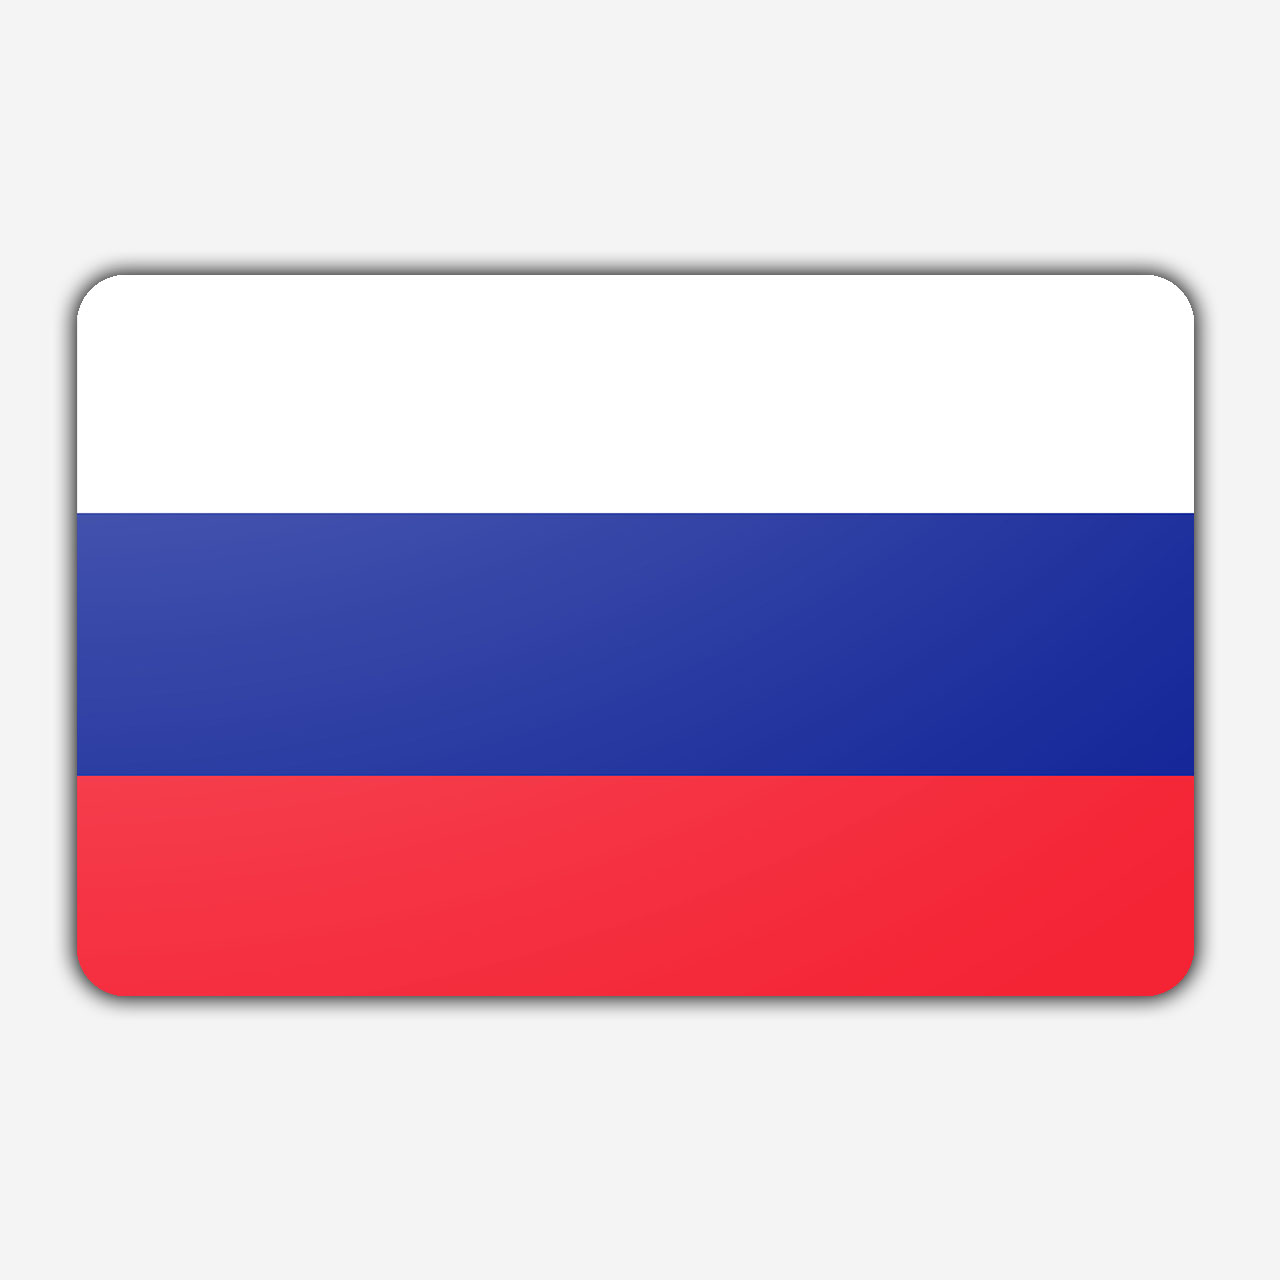 Alabama toespraak overschrijving Vlag Rusland kopen? | Snelle levering & 8.7 klantbeoordeling | Vlaggen.com